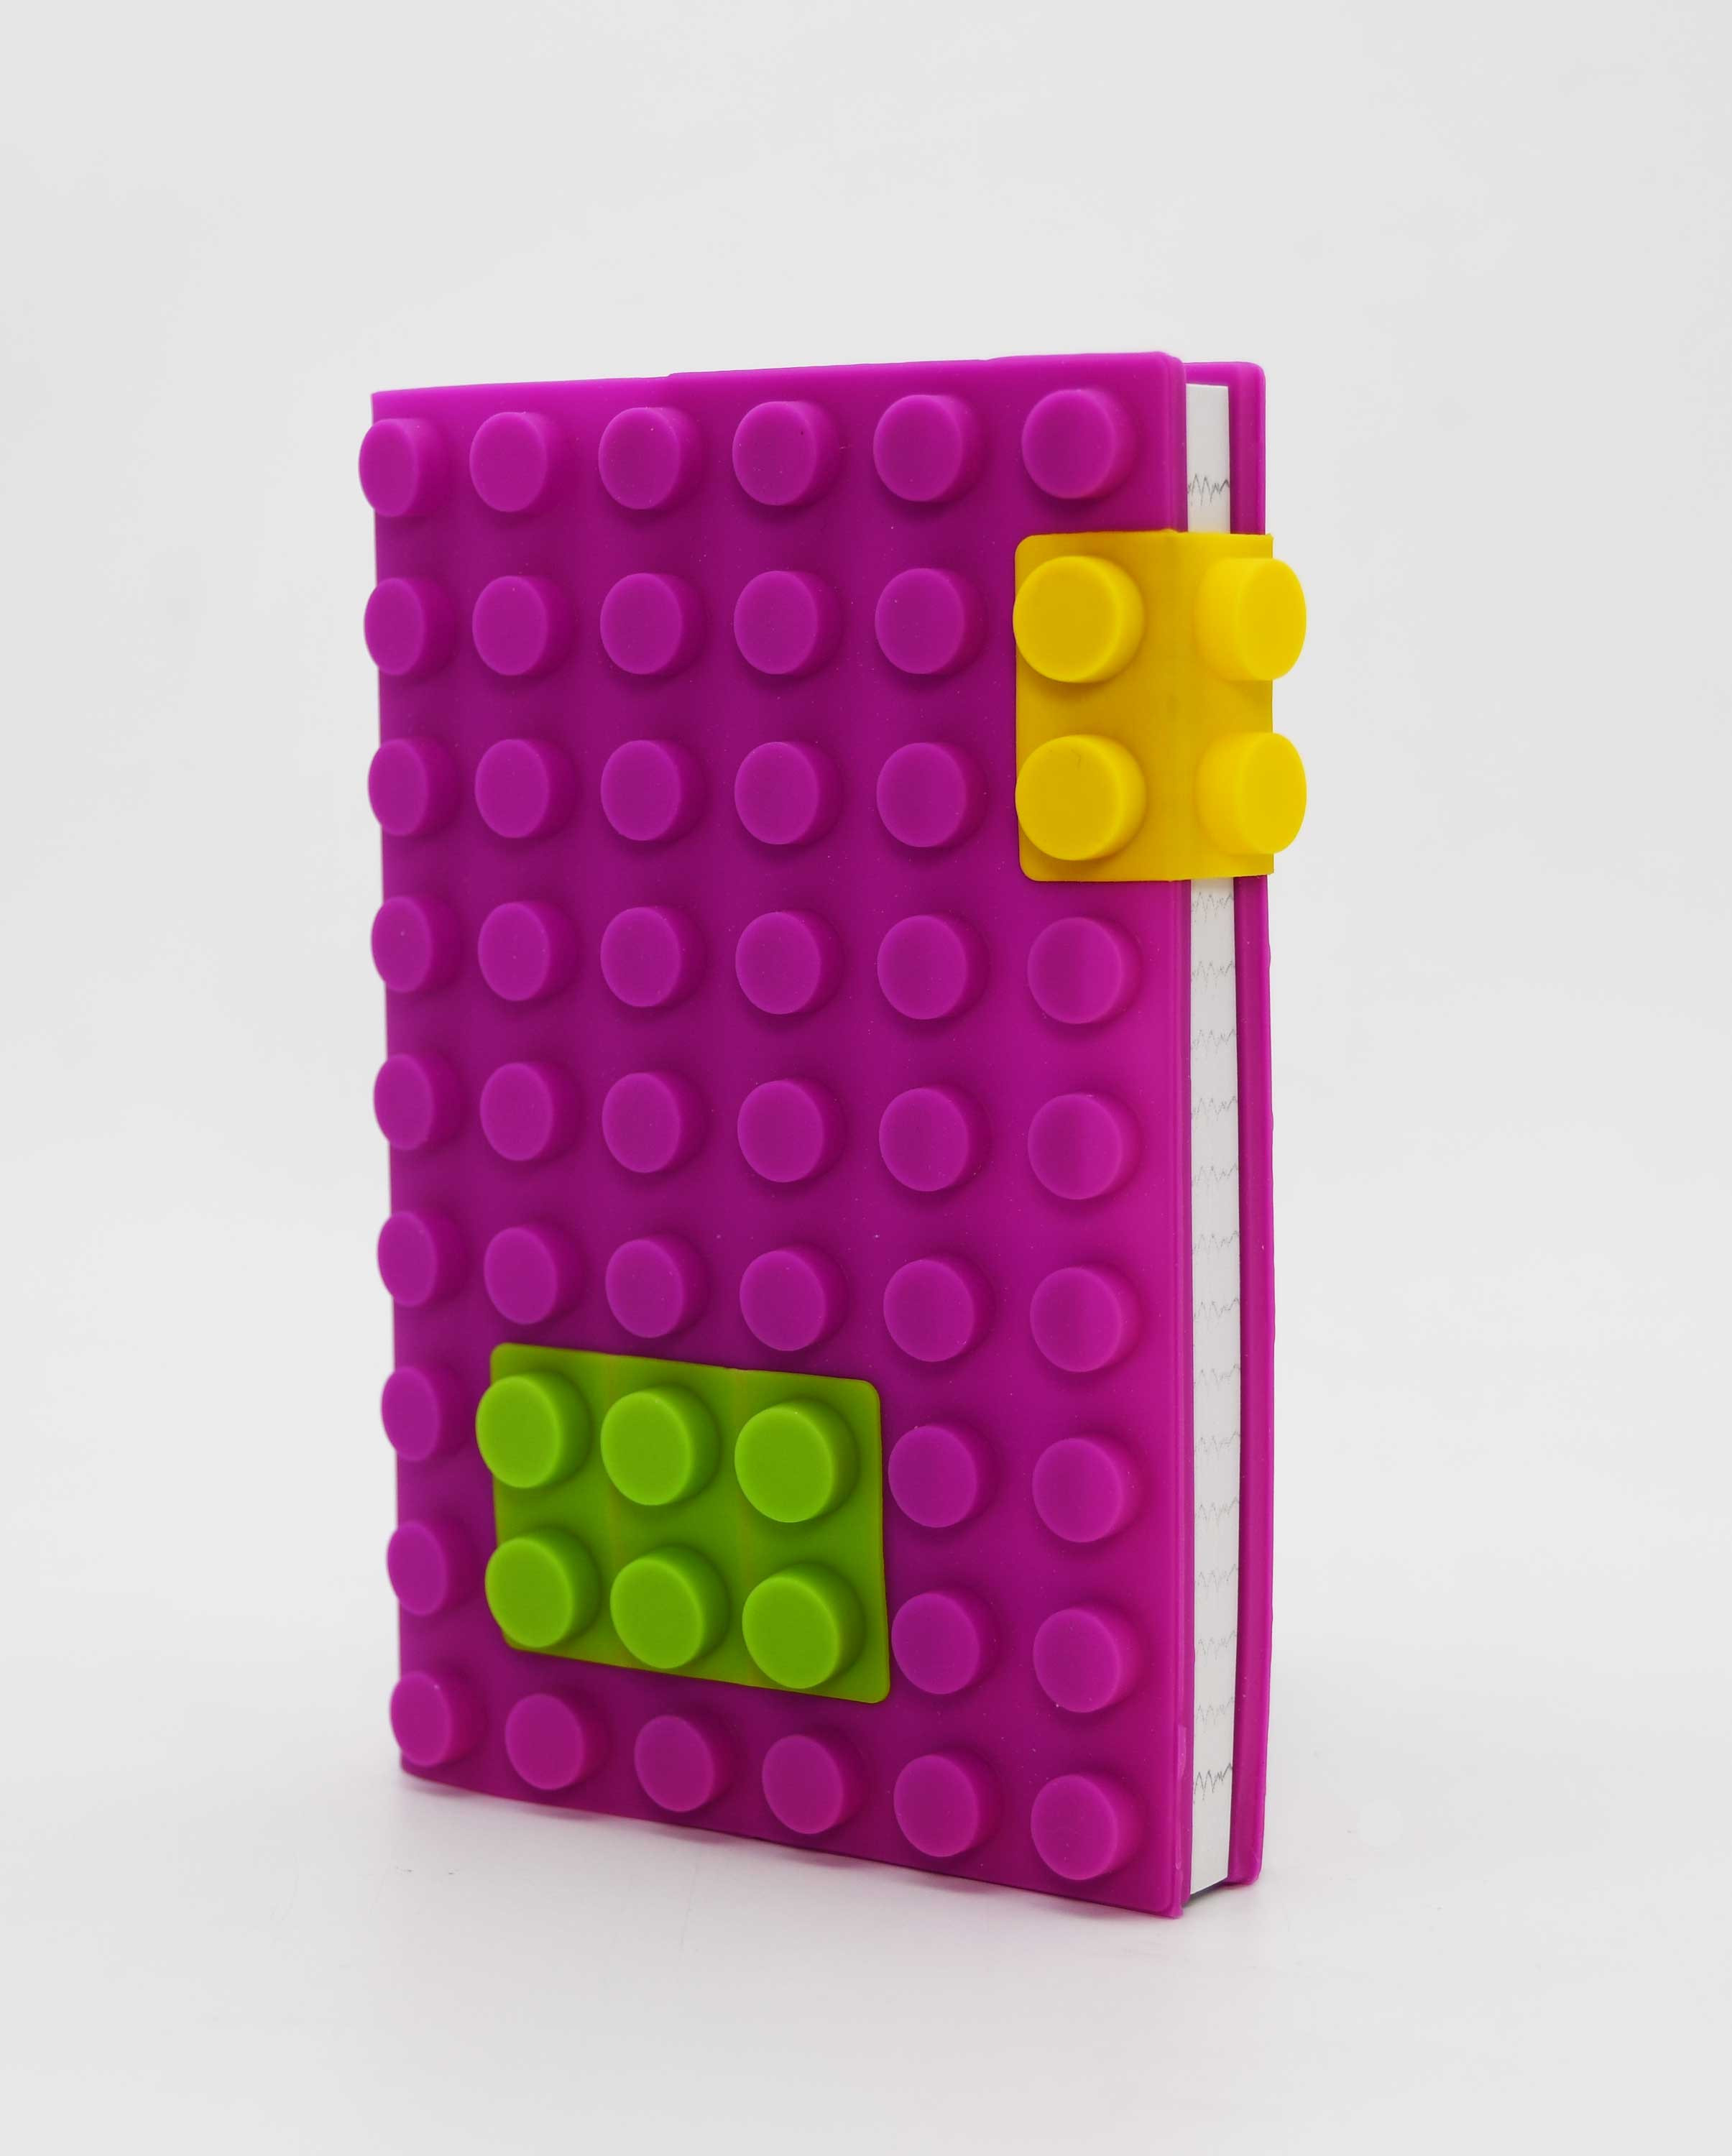 Imagen Note Book Lego 3